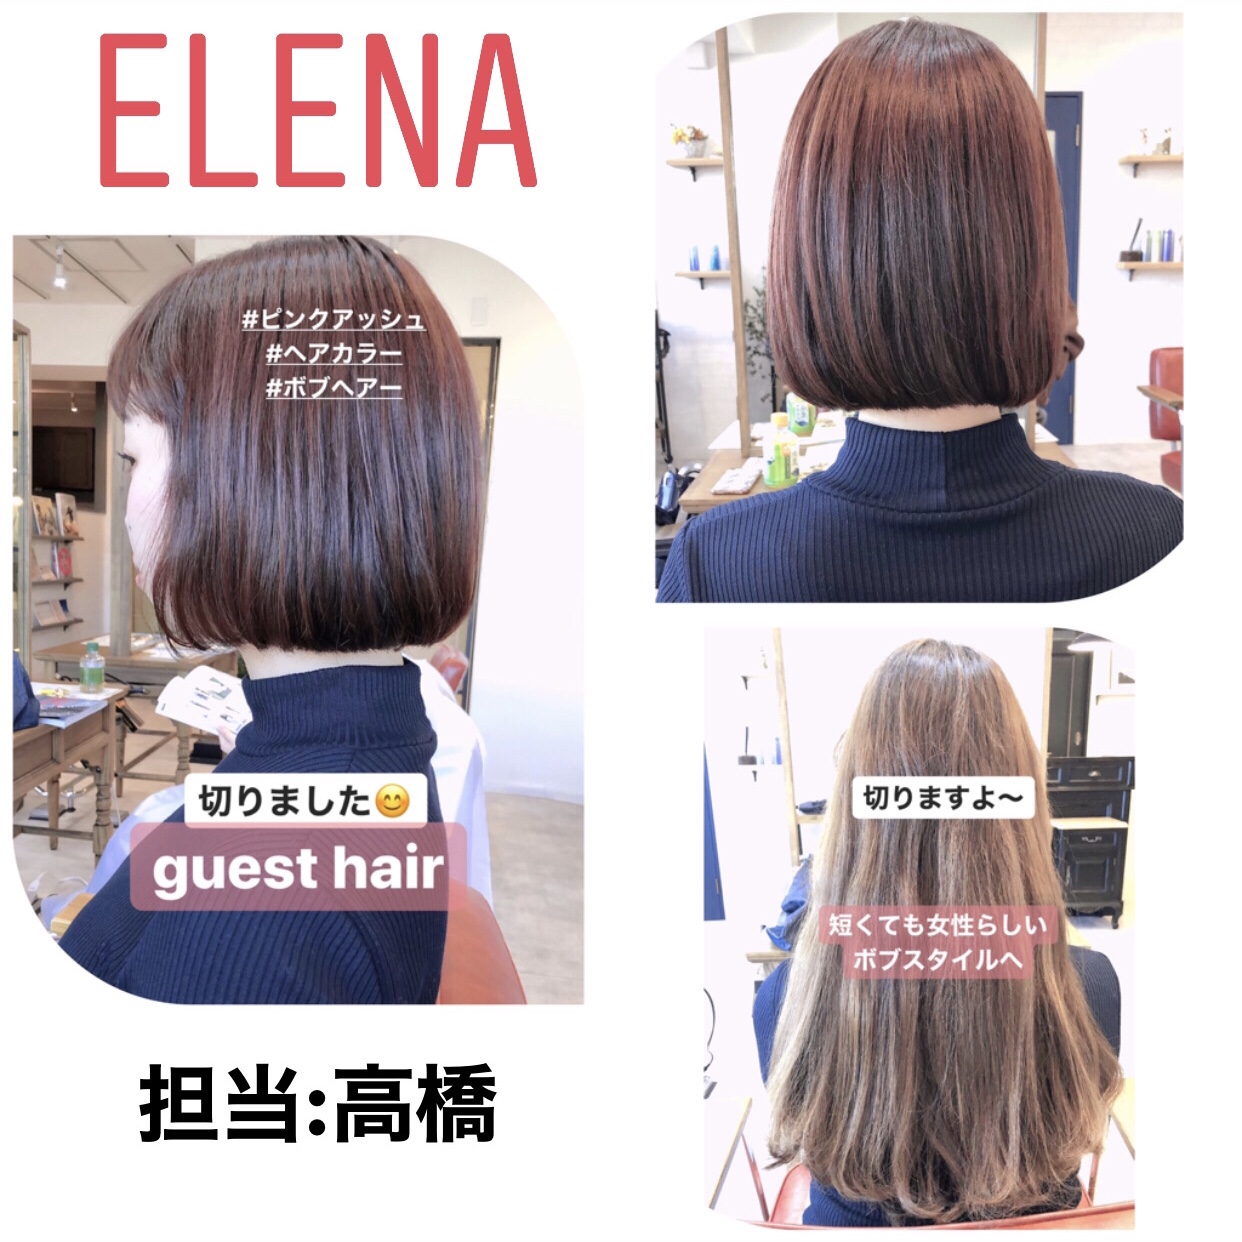 Guest Hair ピンクアッシュ ボブ Elena Hair